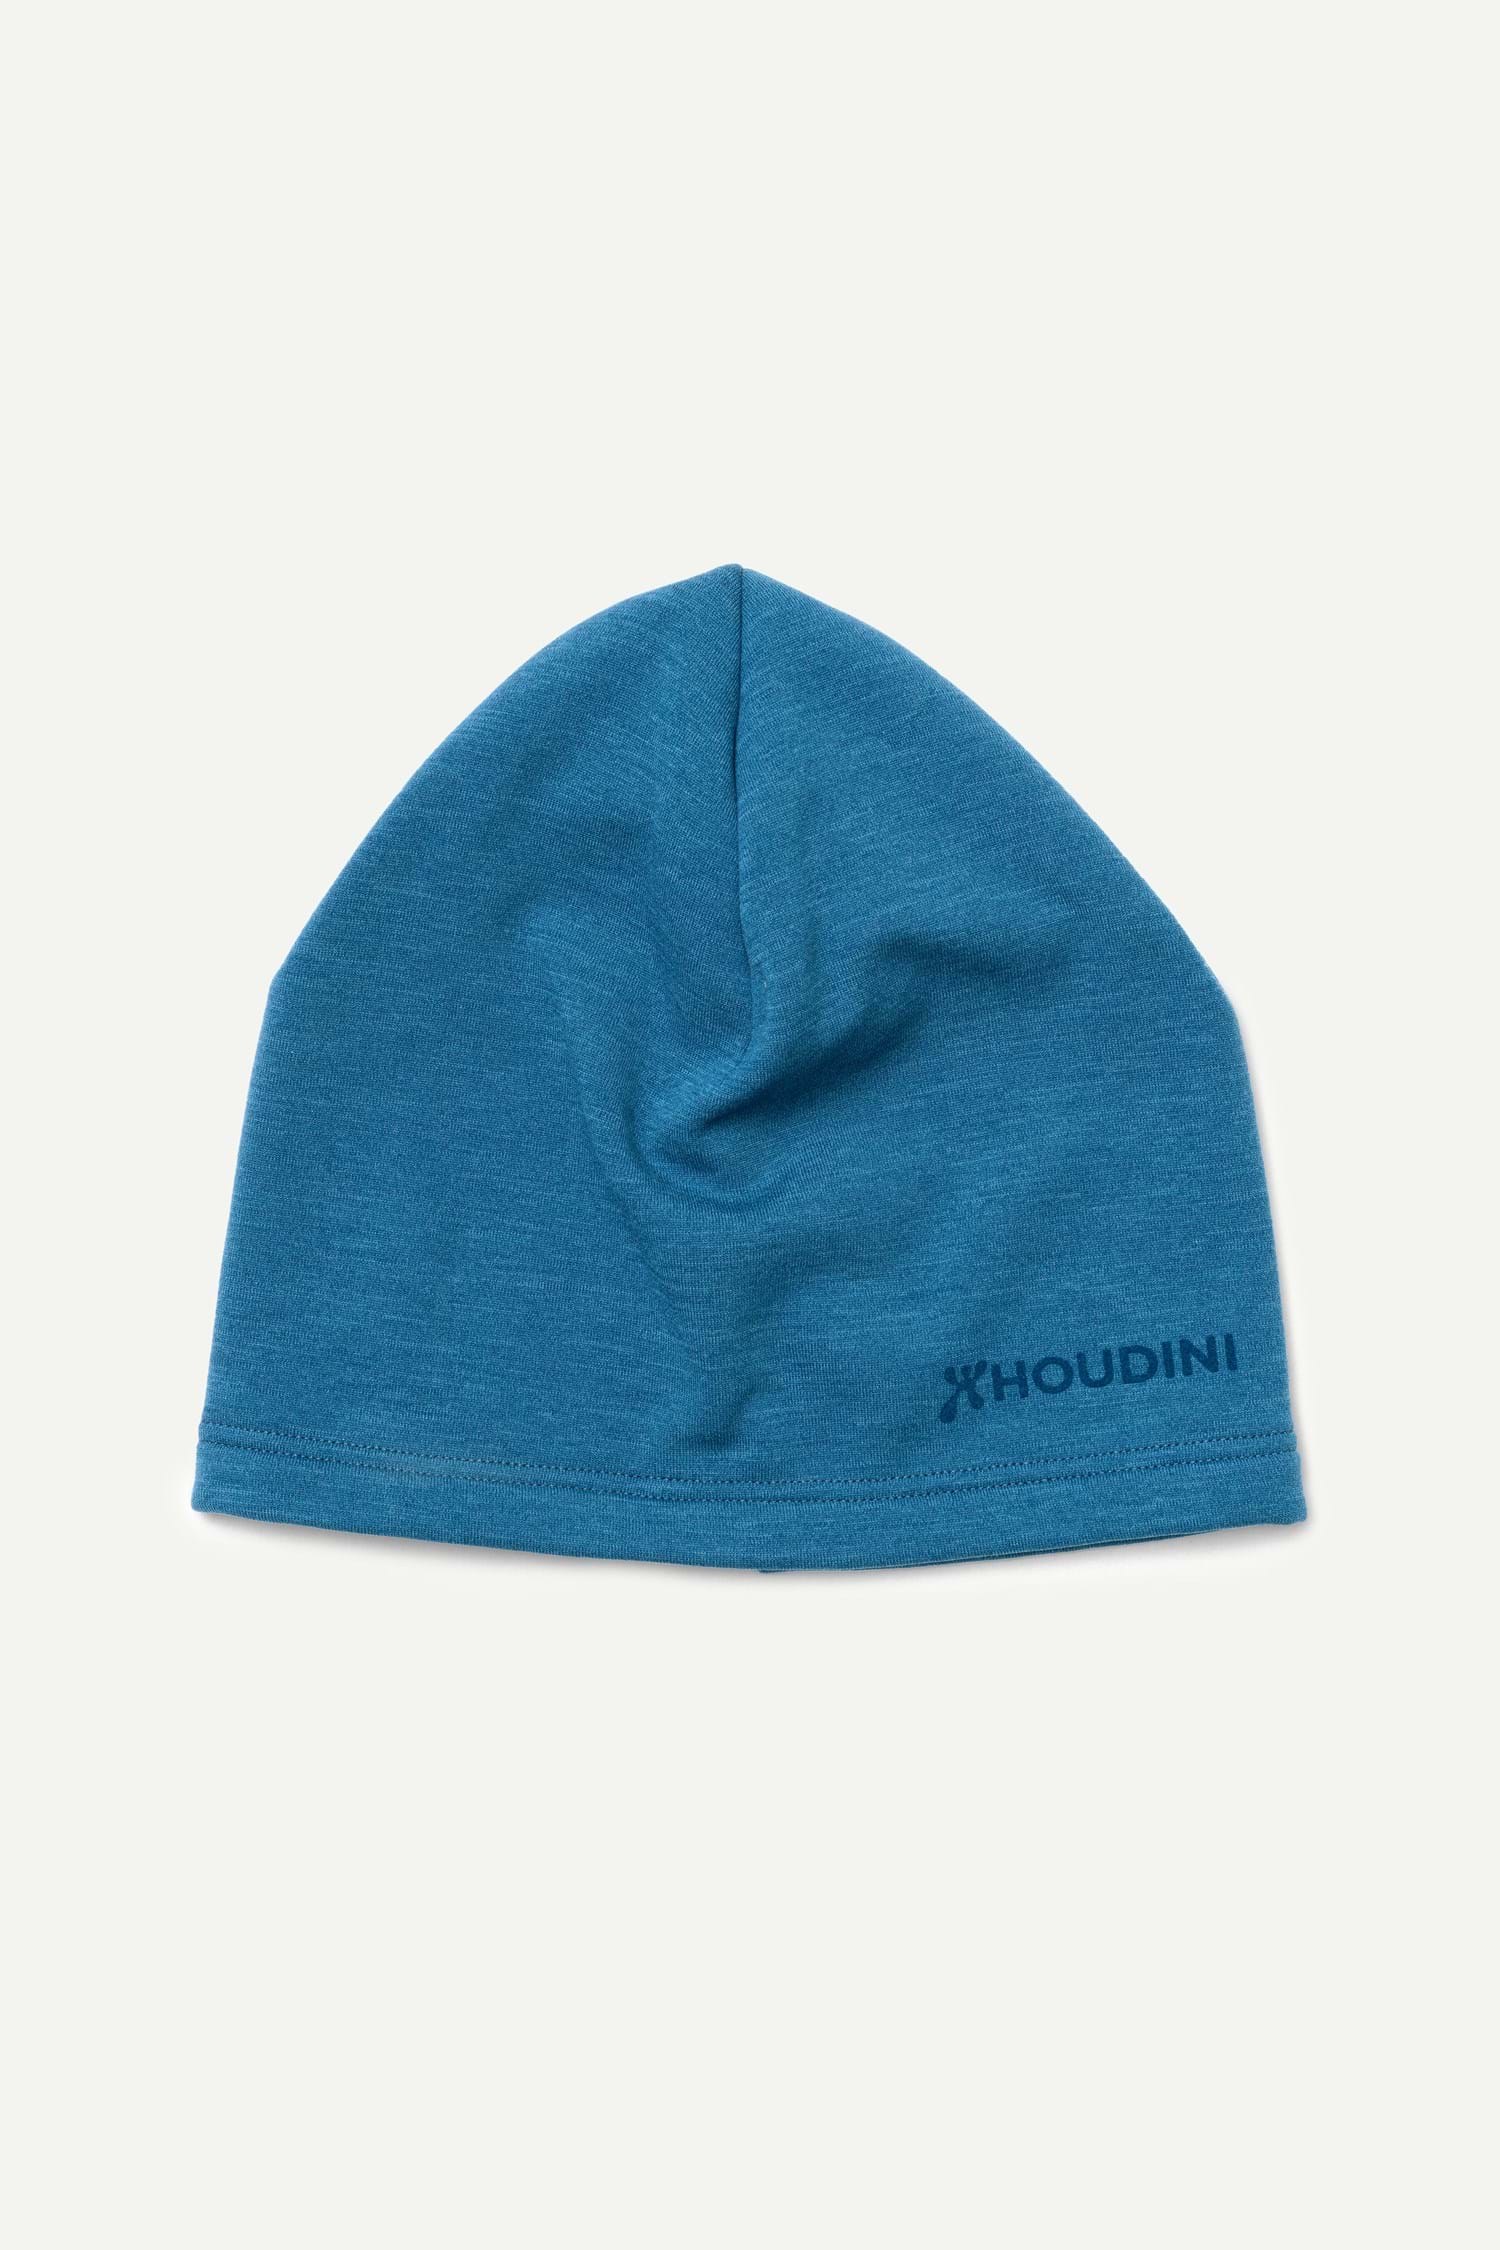 Houdini Outright Hat, Folk Blue, L